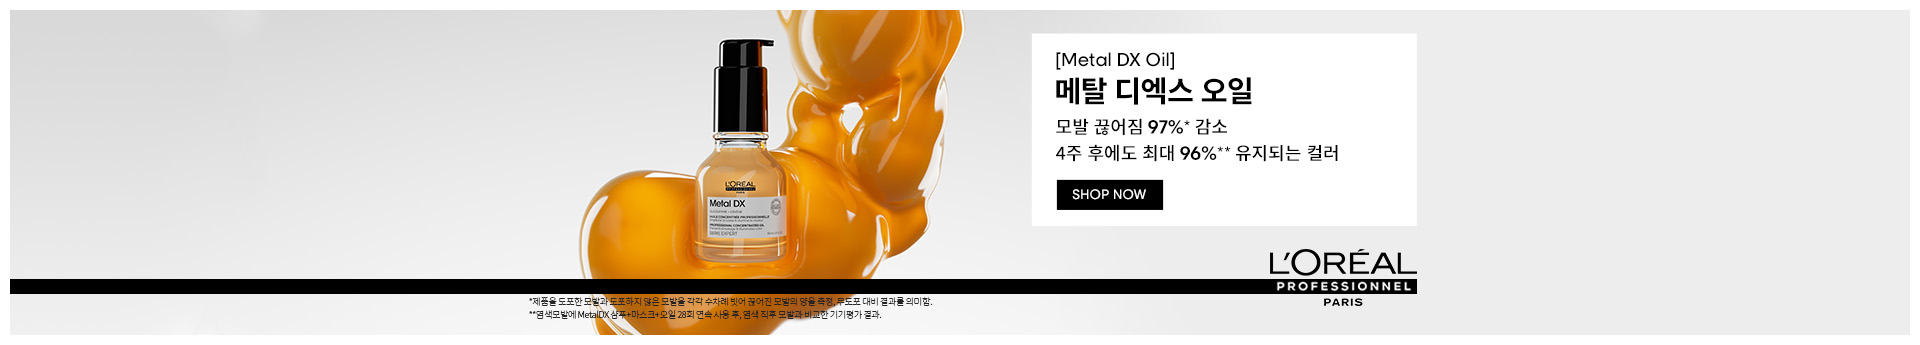 Homepage_banner-Metal_DX_oil | L'Oréal 파트너샵